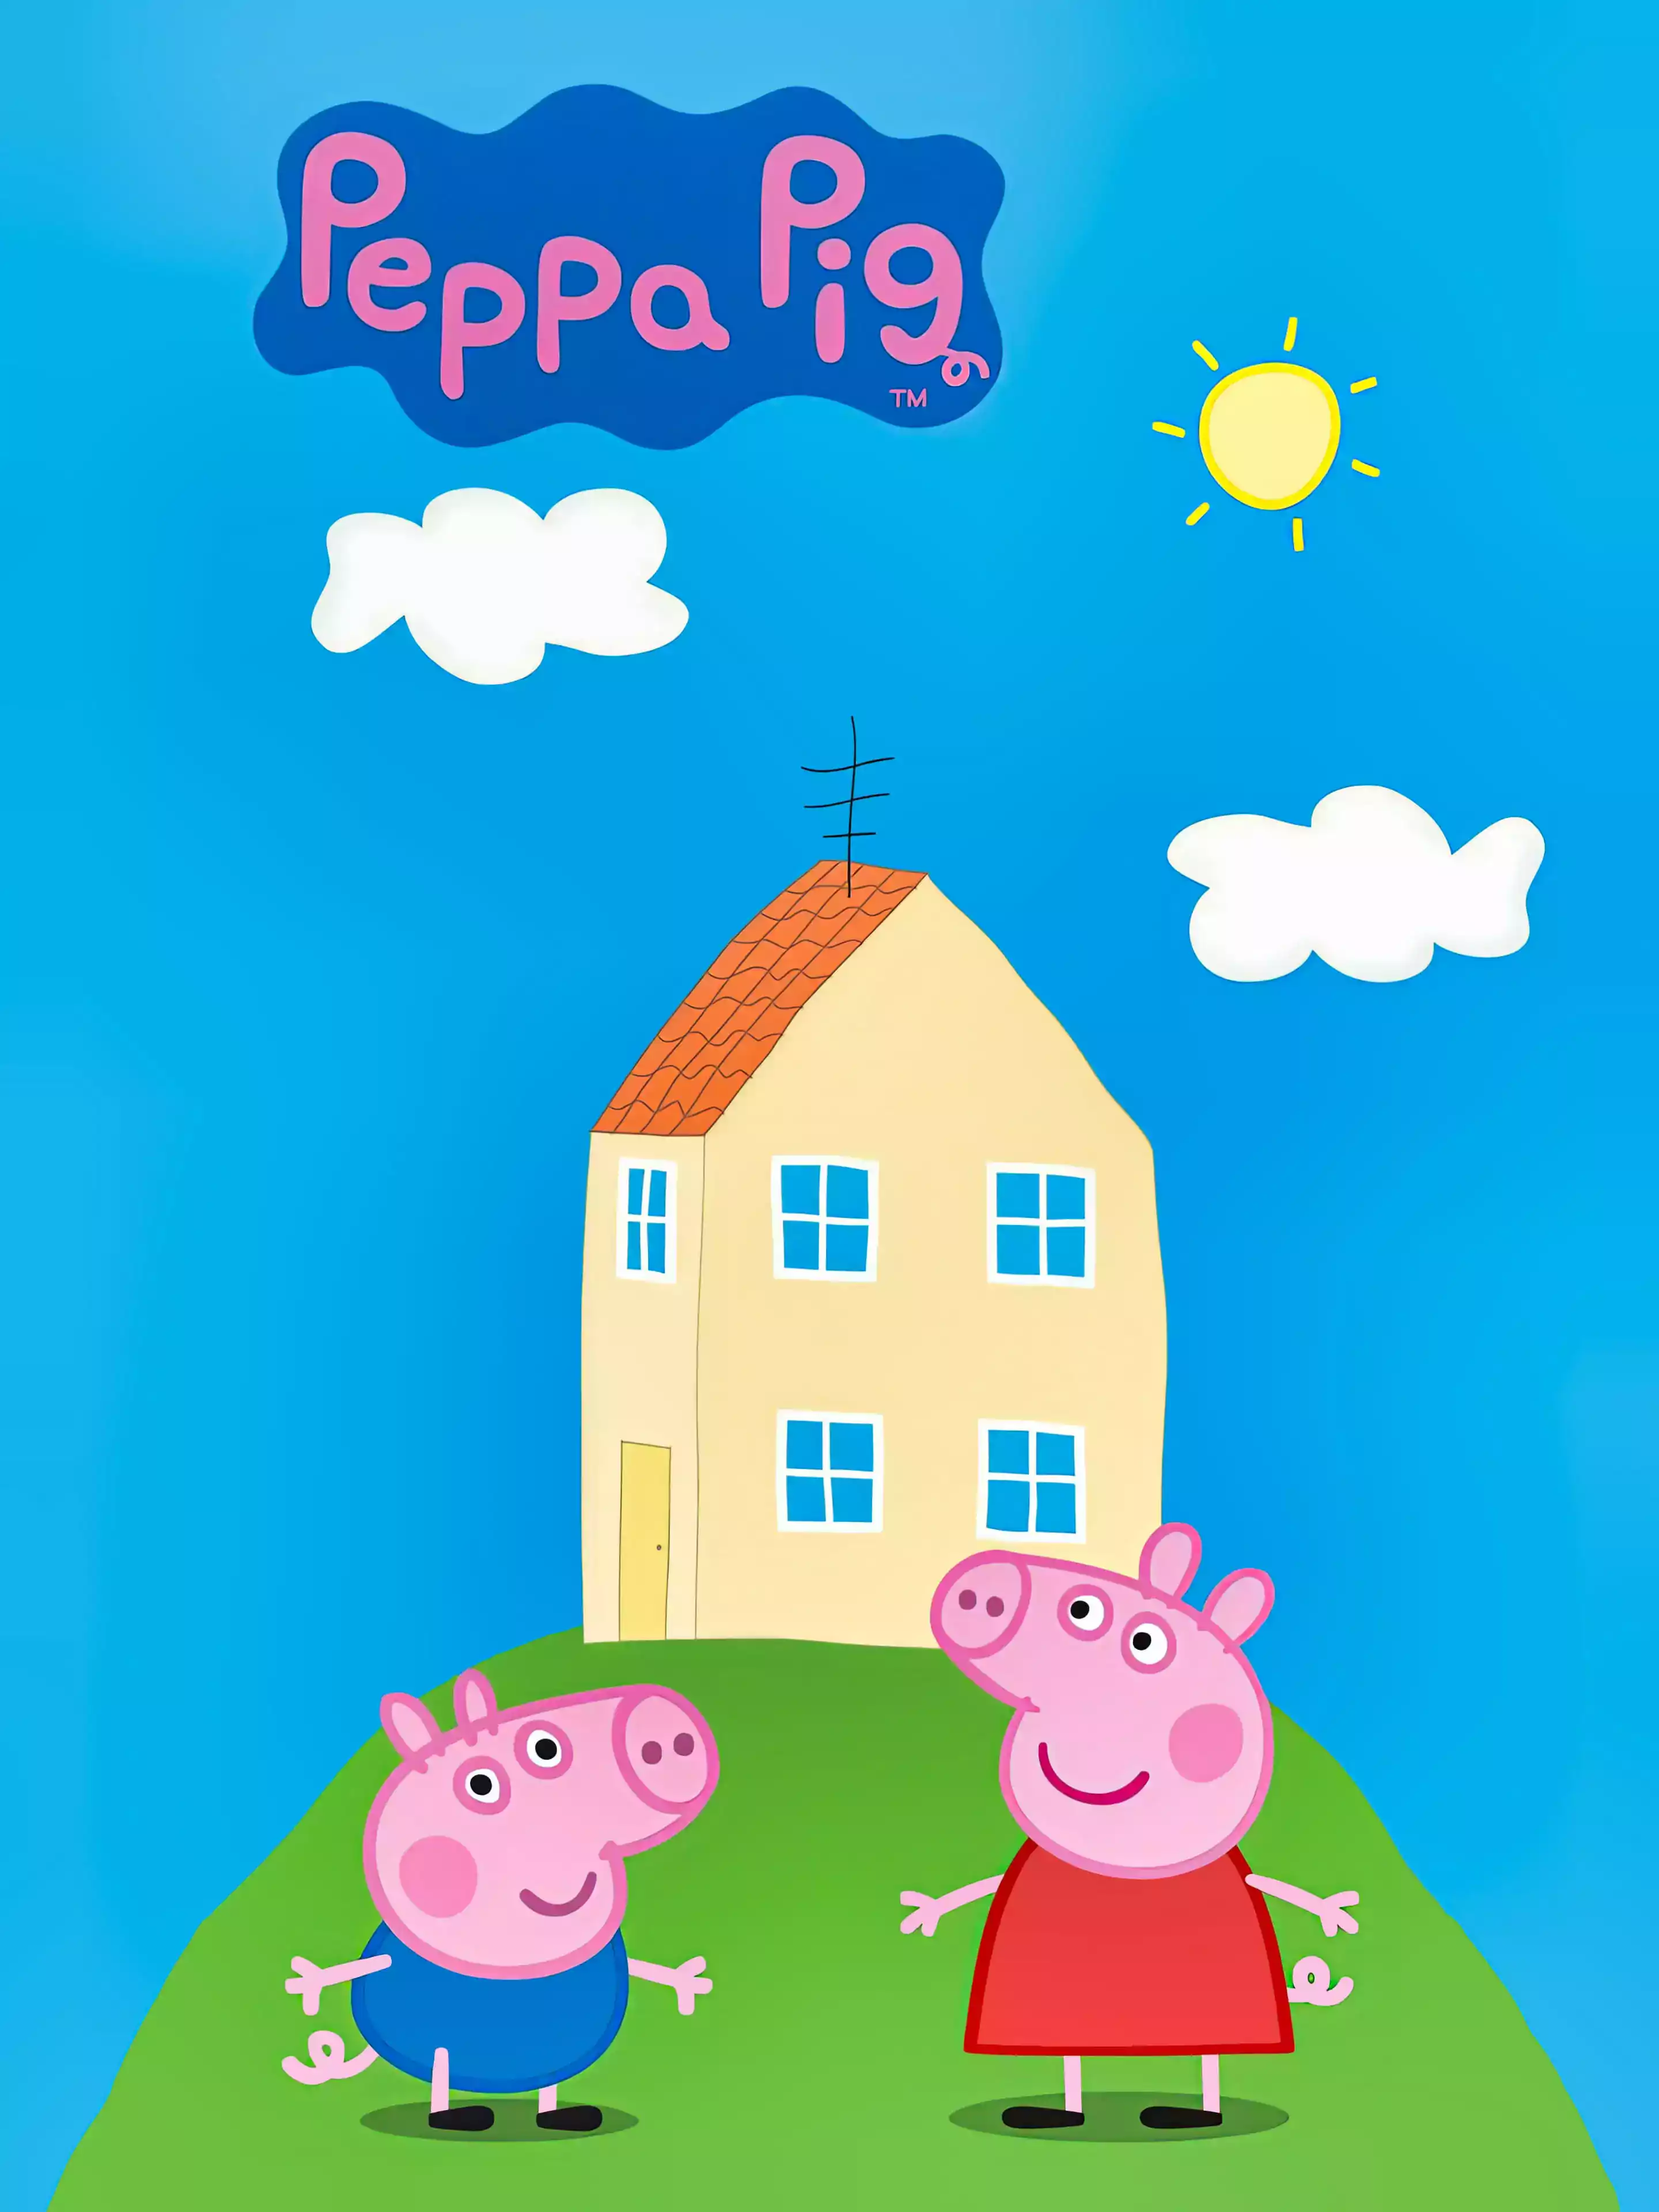 PEPPA PIG HOUSE WALLPAPER! 